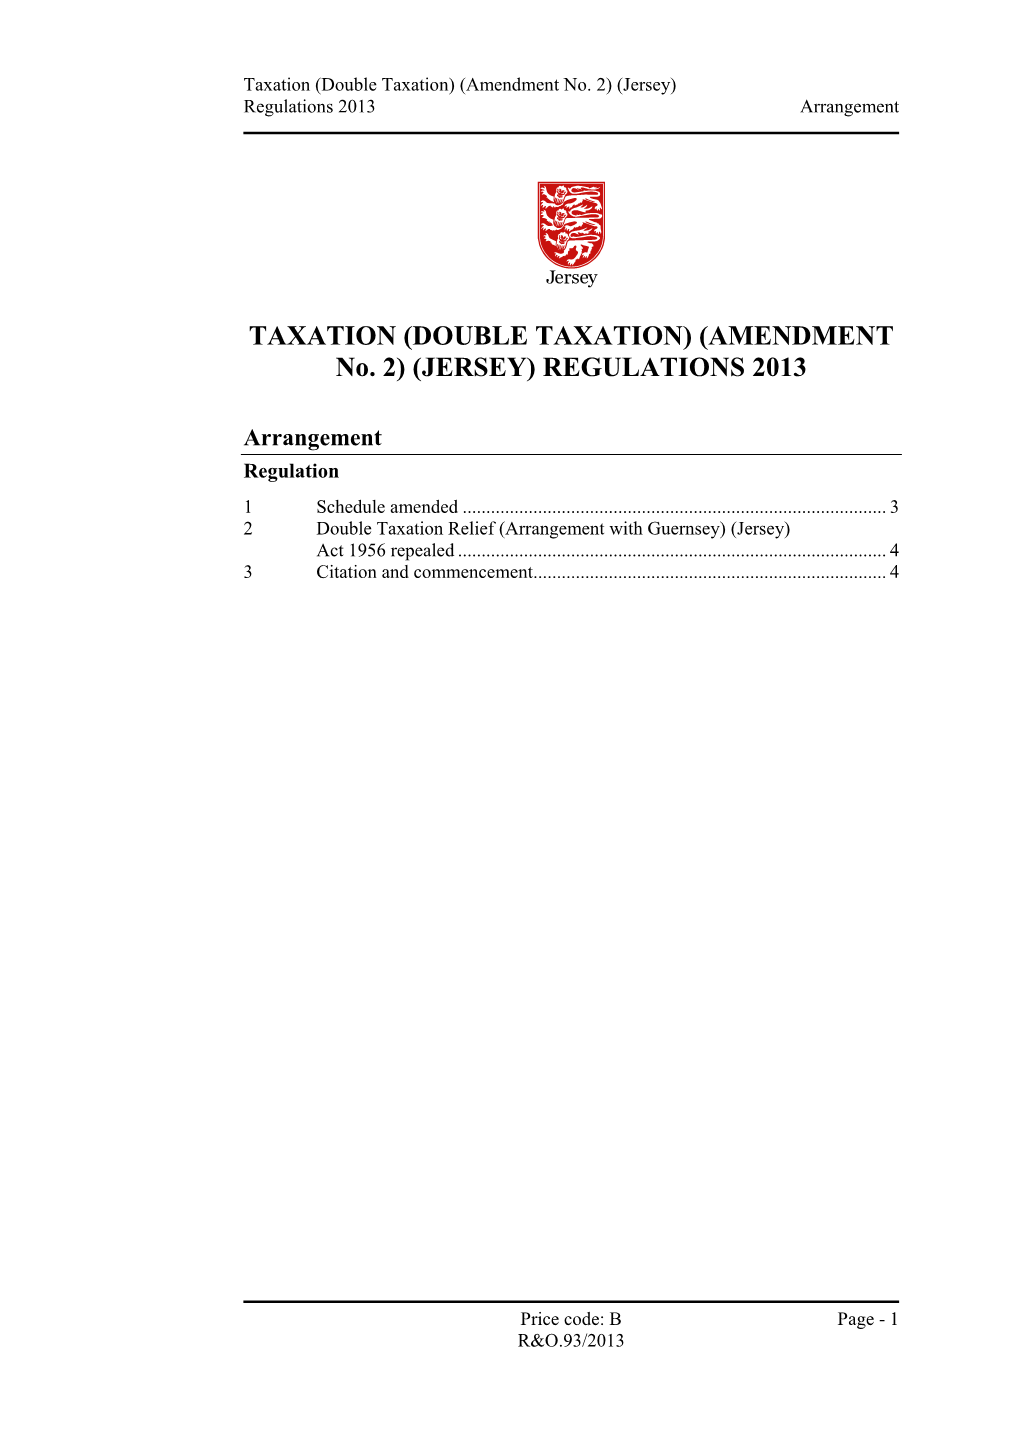 Regulations 2013 Arrangement